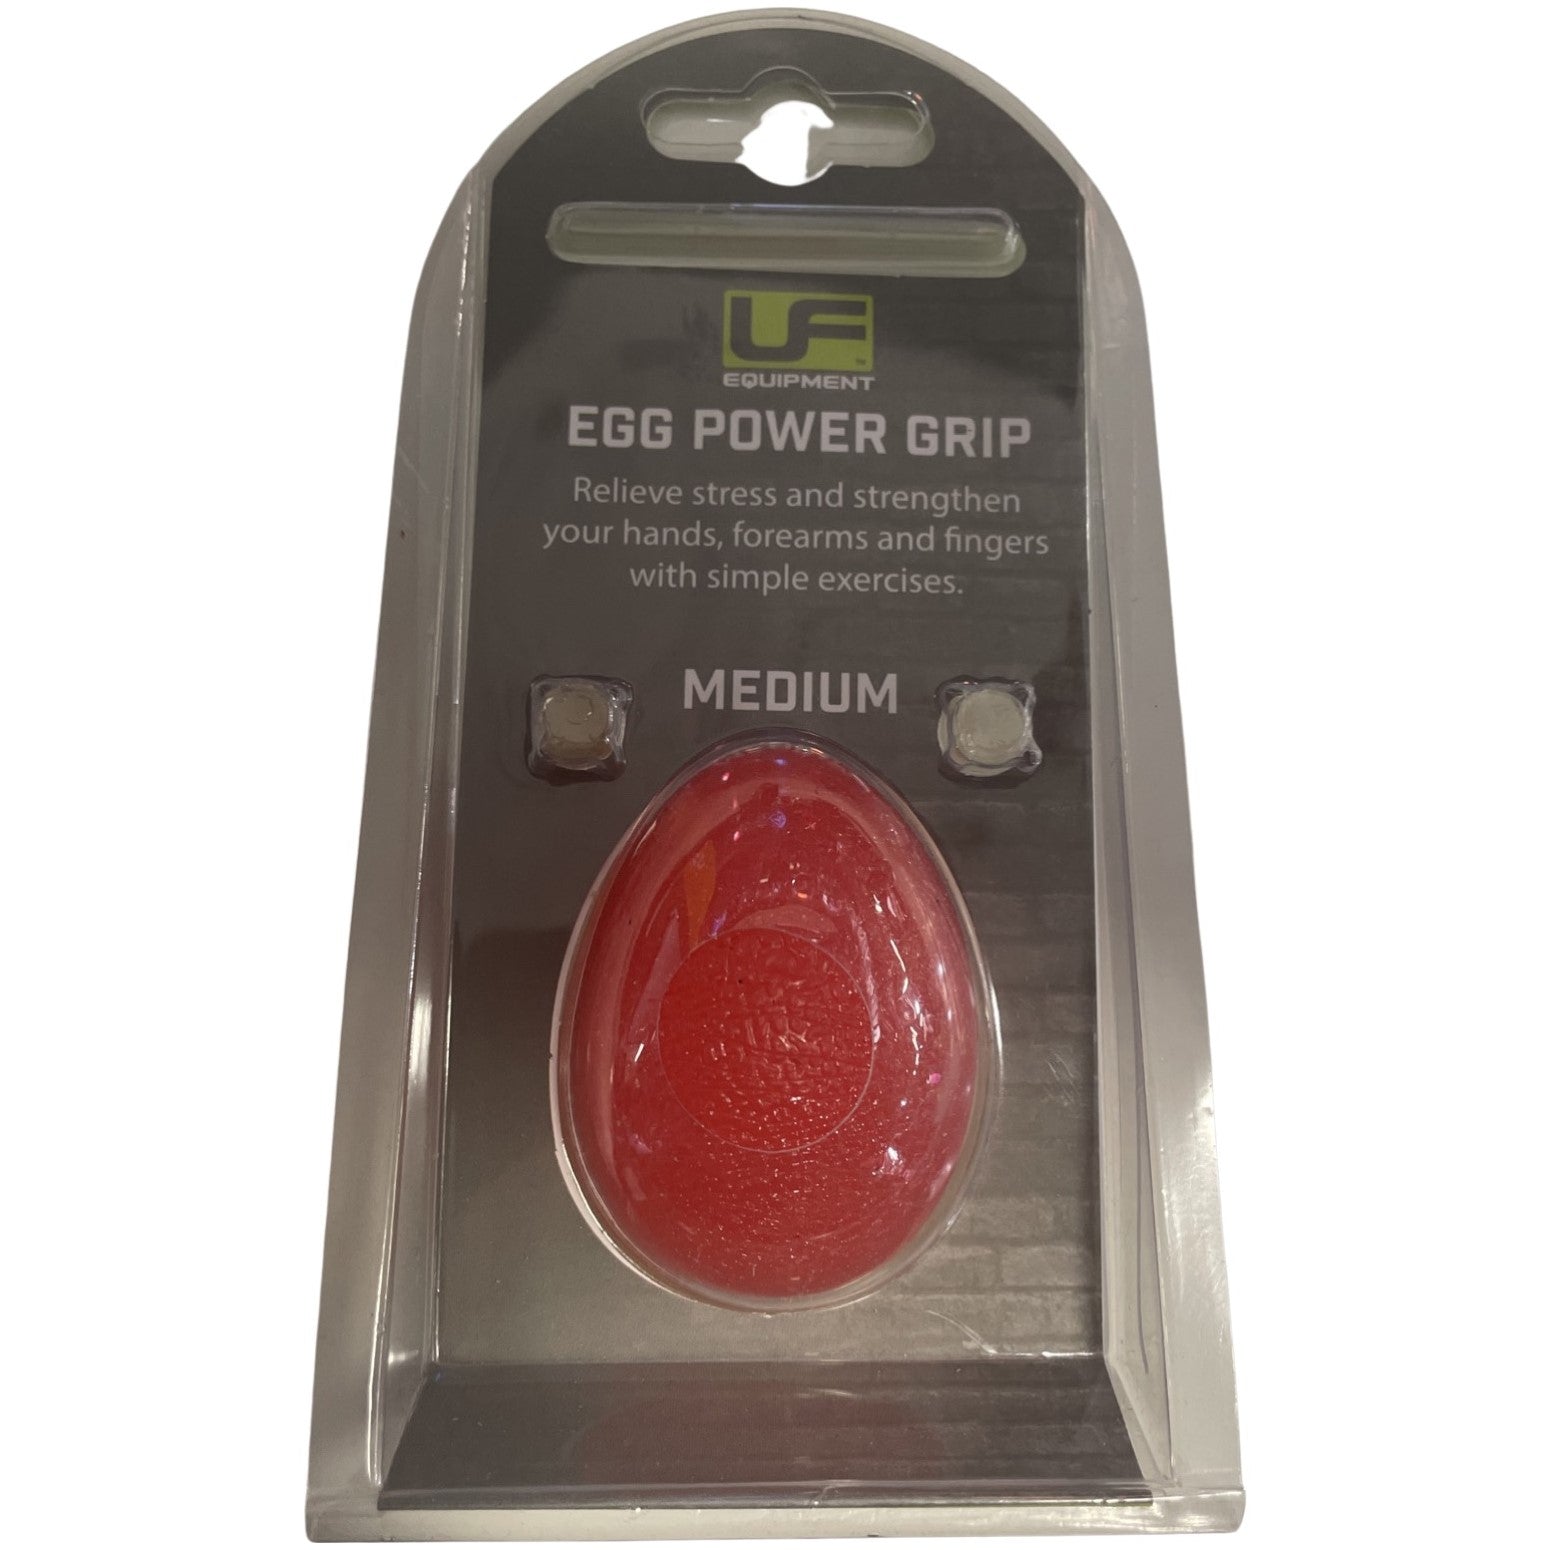 UFE Egg Power Grip - Medium